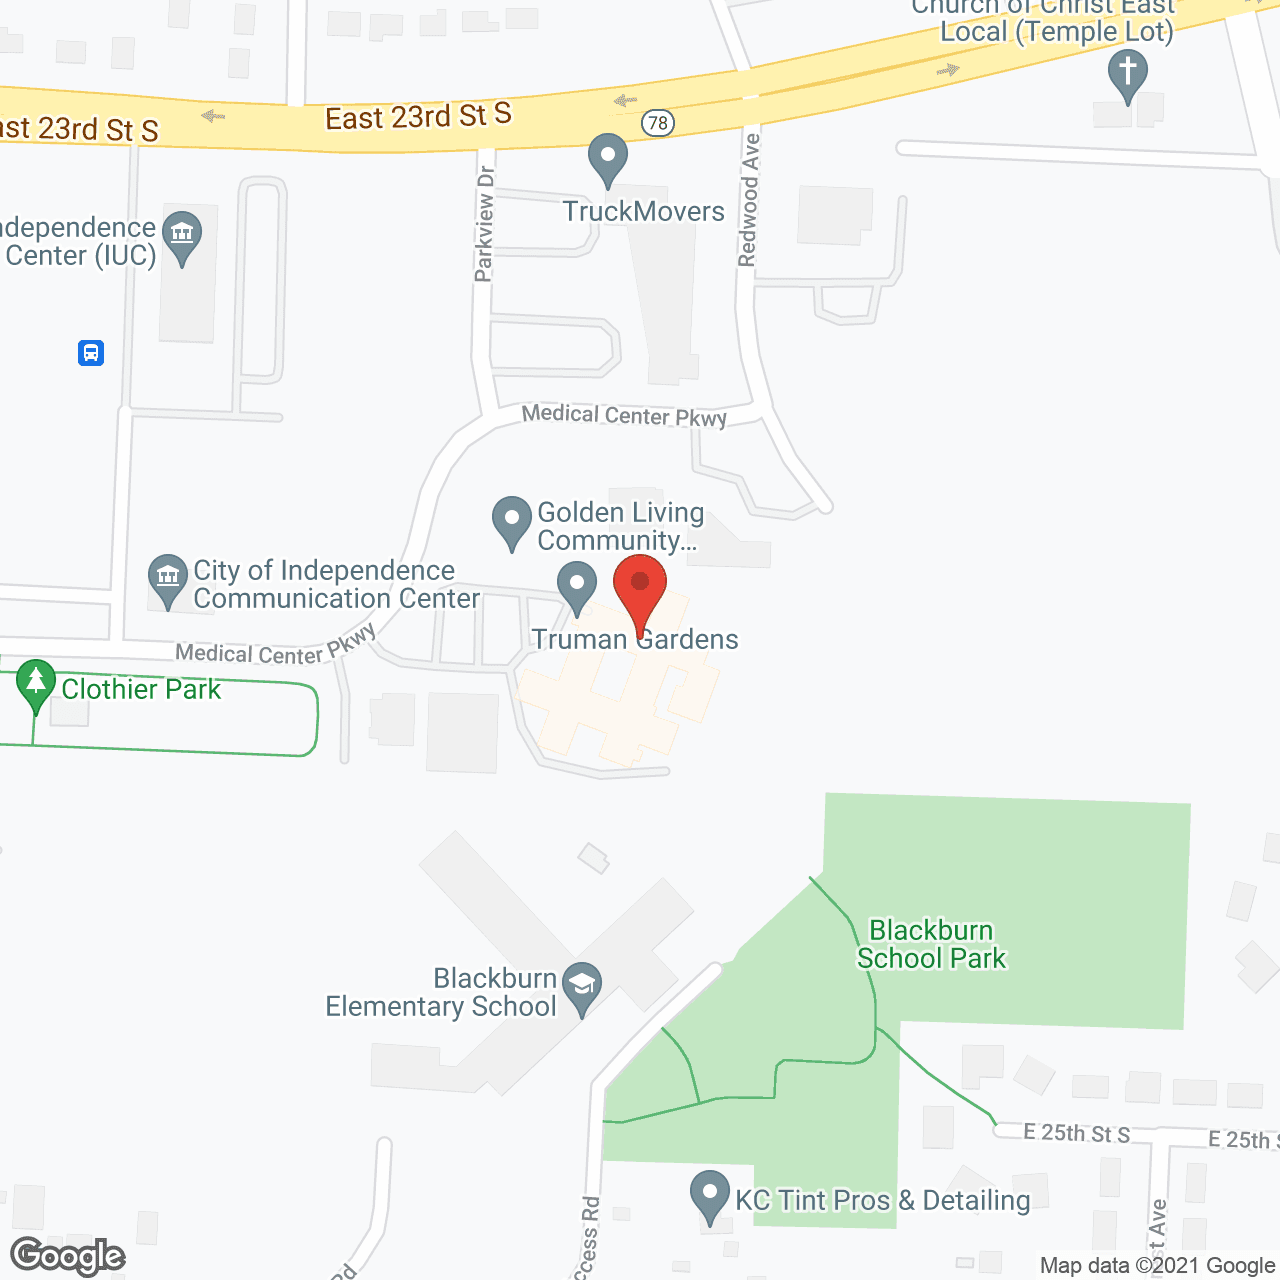 Truman Gardens in google map